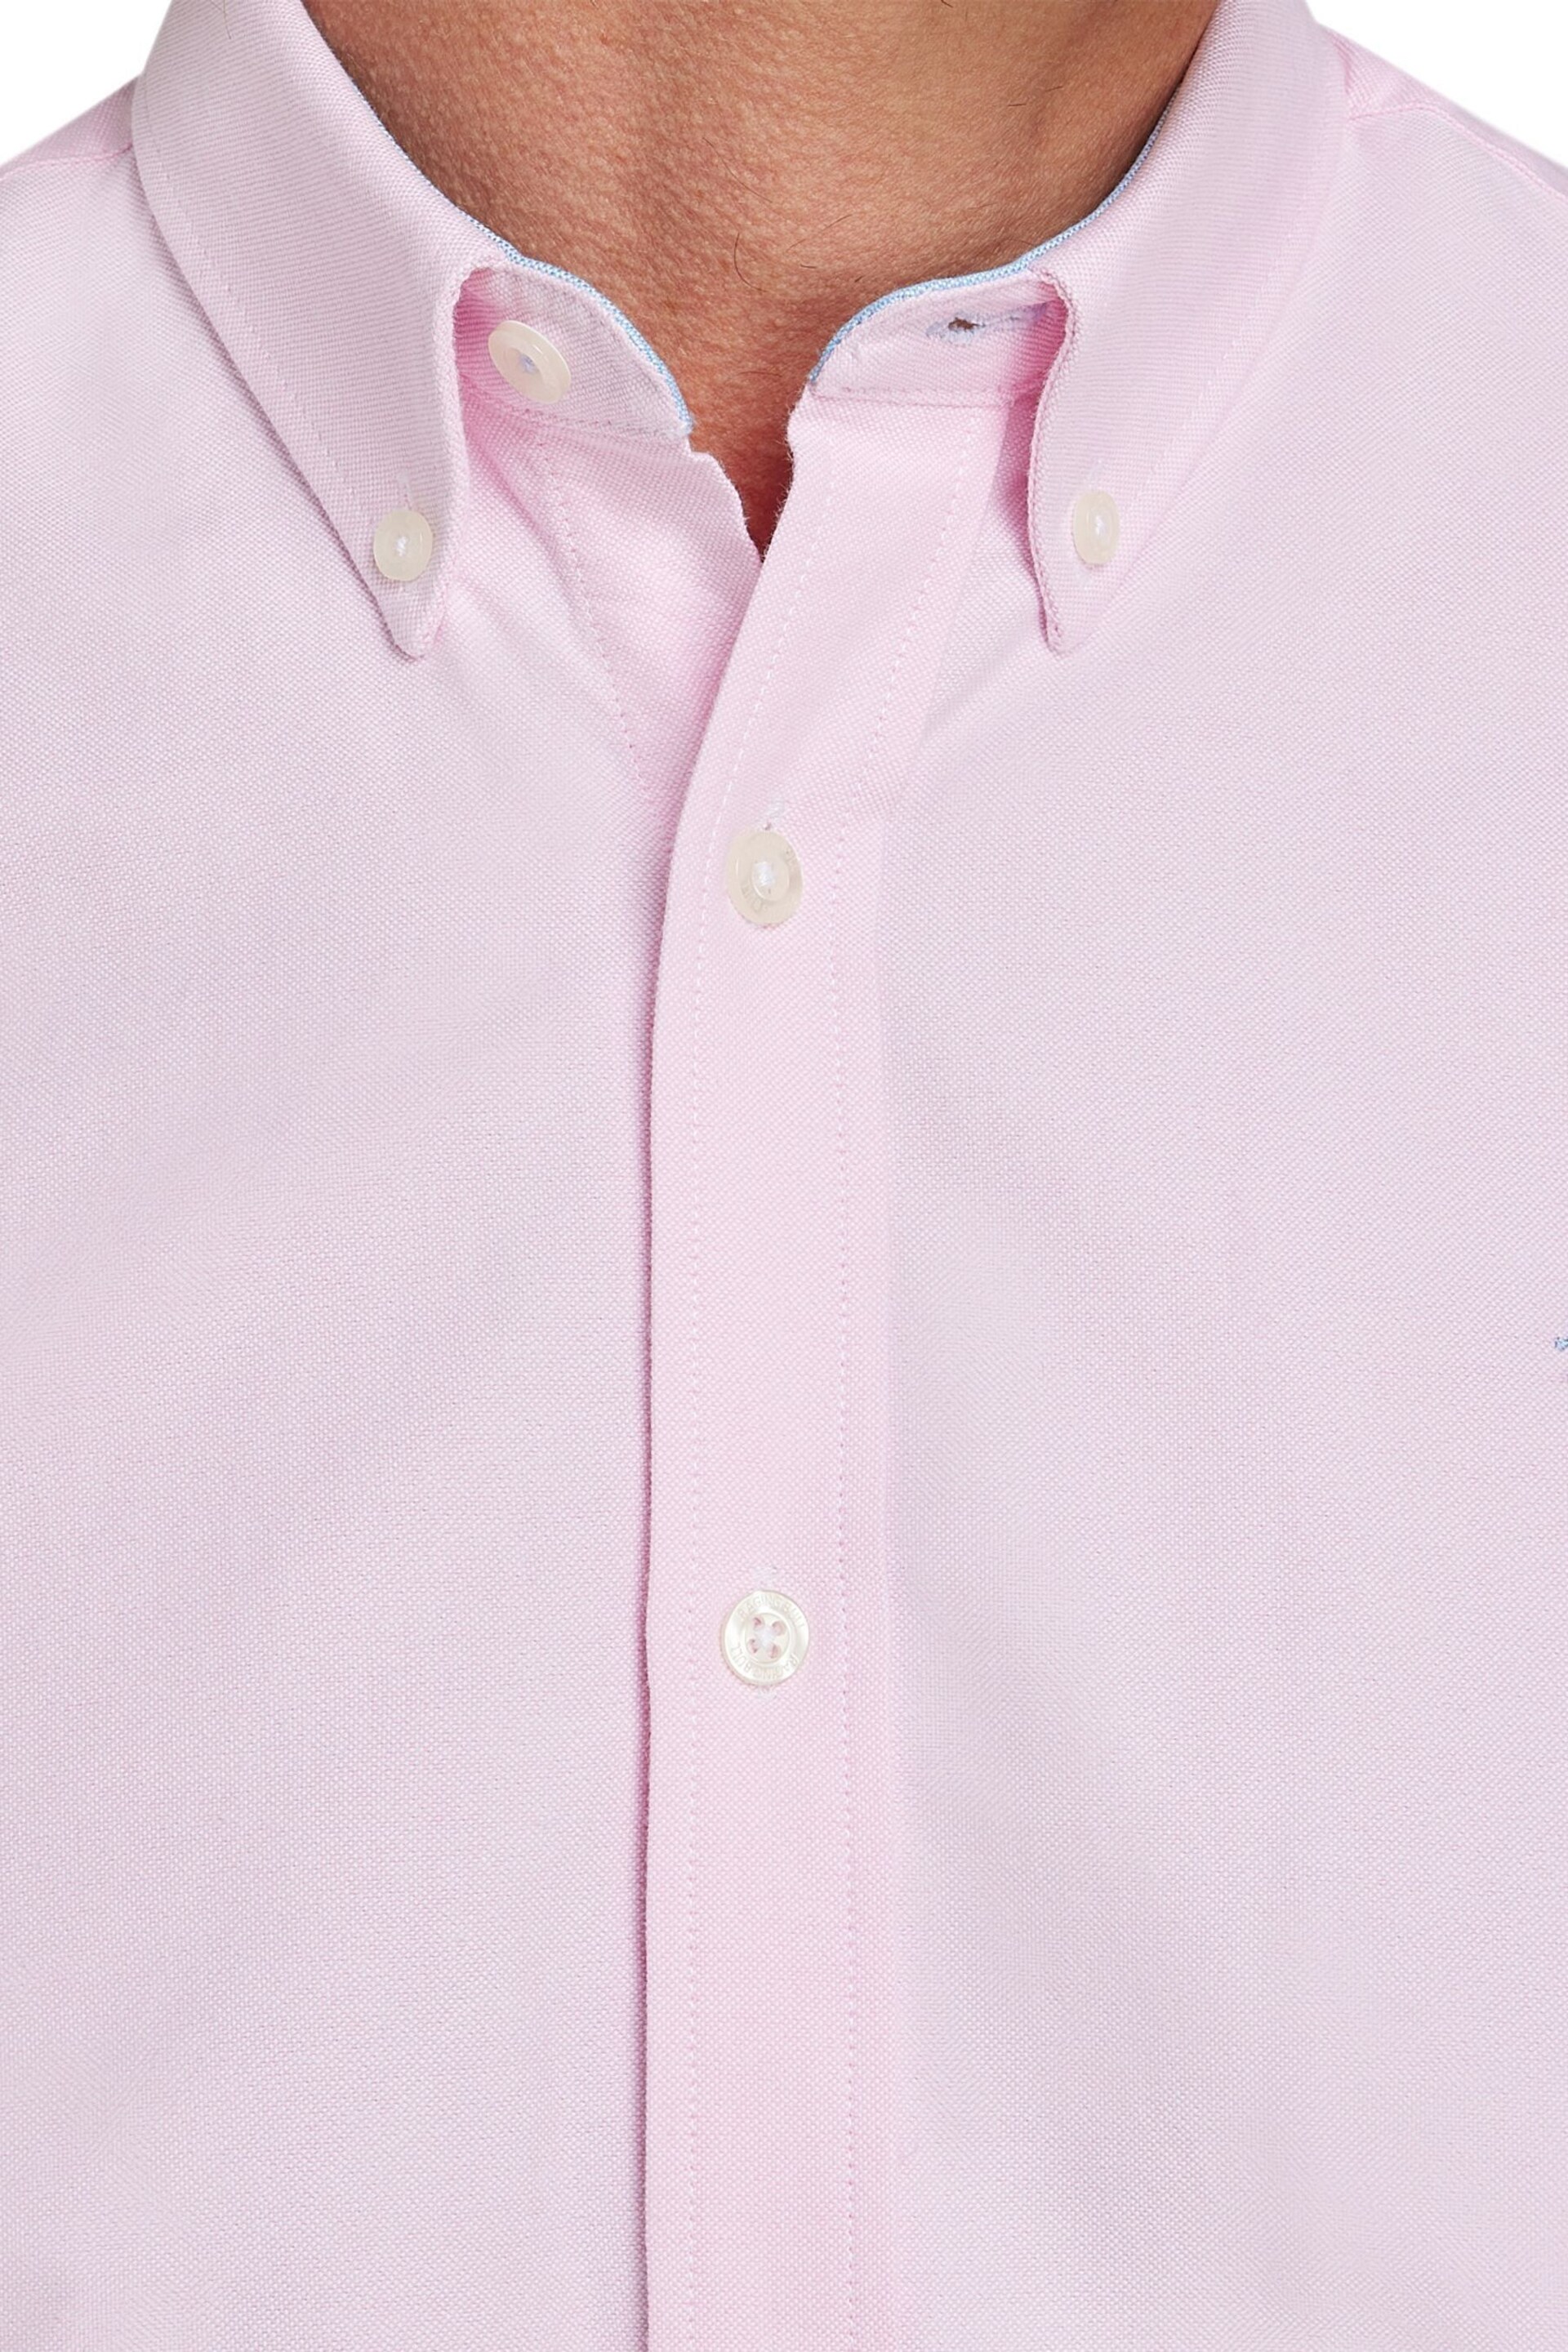 Raging Bull Pink Short Sleeve Lightweight Oxford Shirt - Image 4 of 7